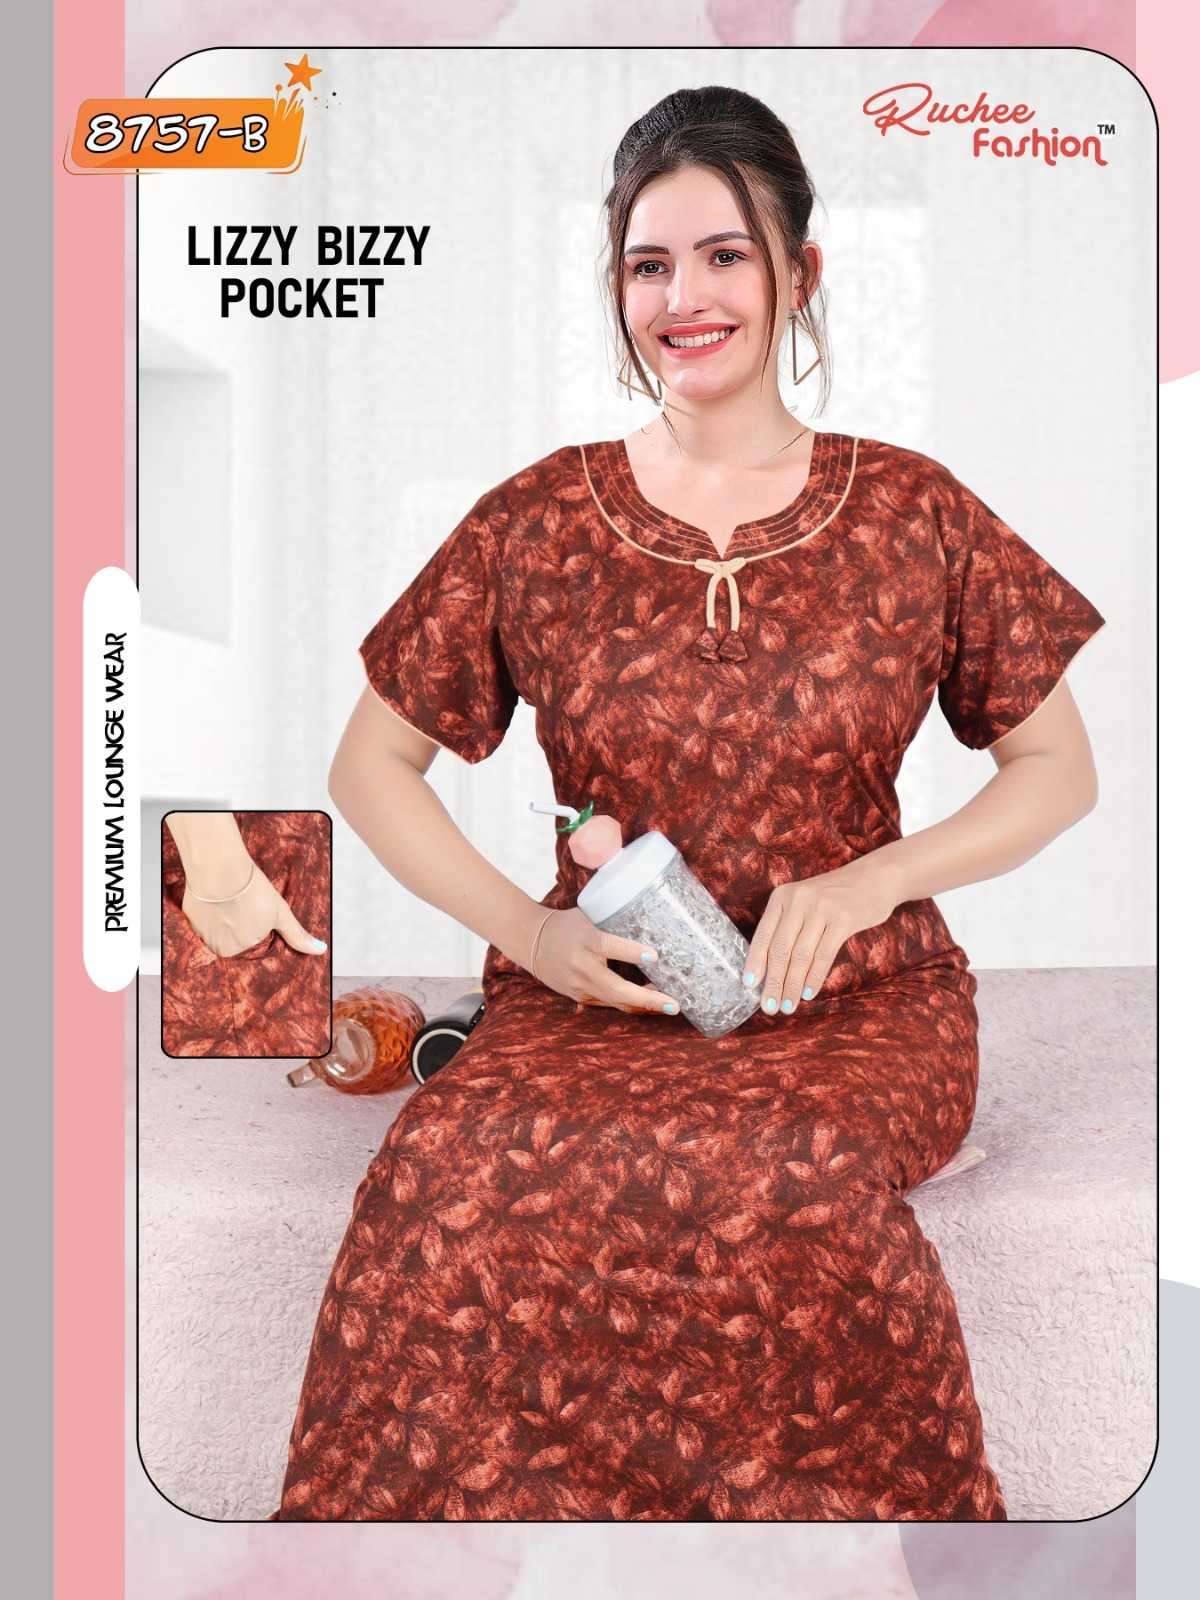 ruchee fashion lizzy bizzy pocket 8756-8760 comfy night gown